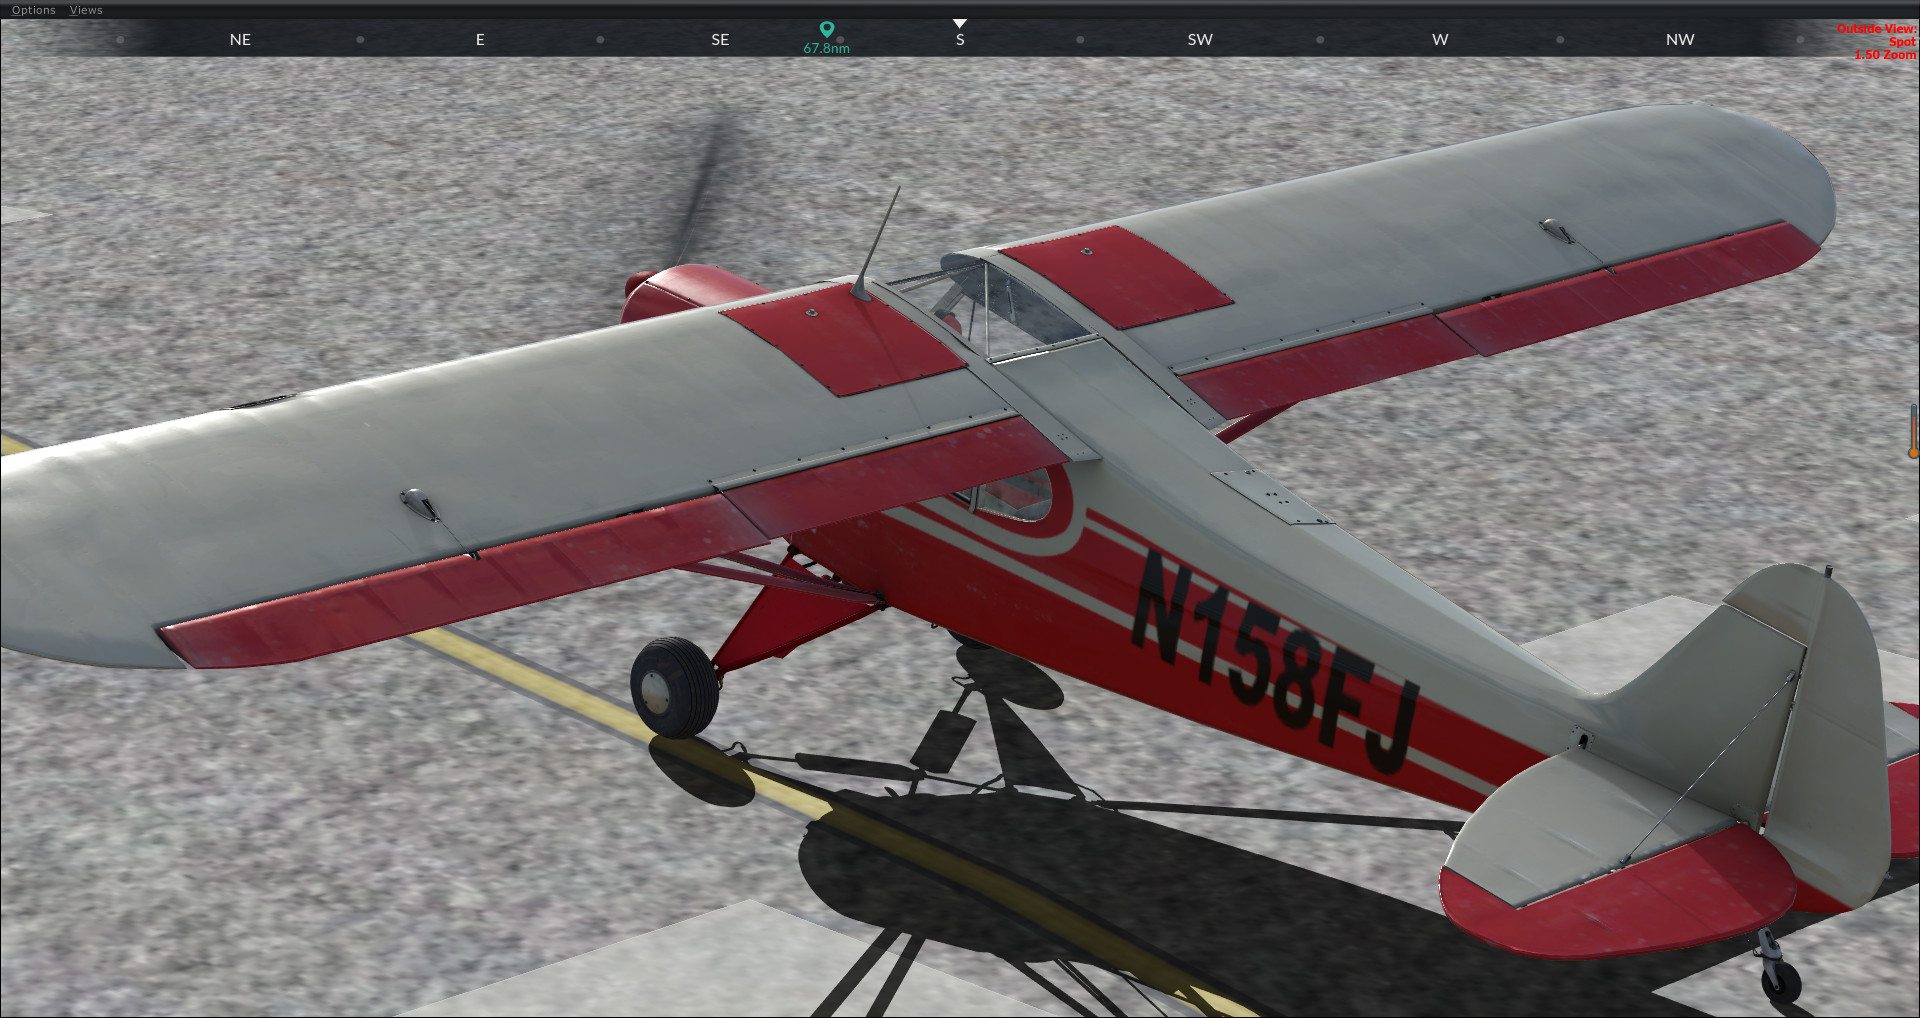 Flight Sim World默认七款小型飞机图片-7274 